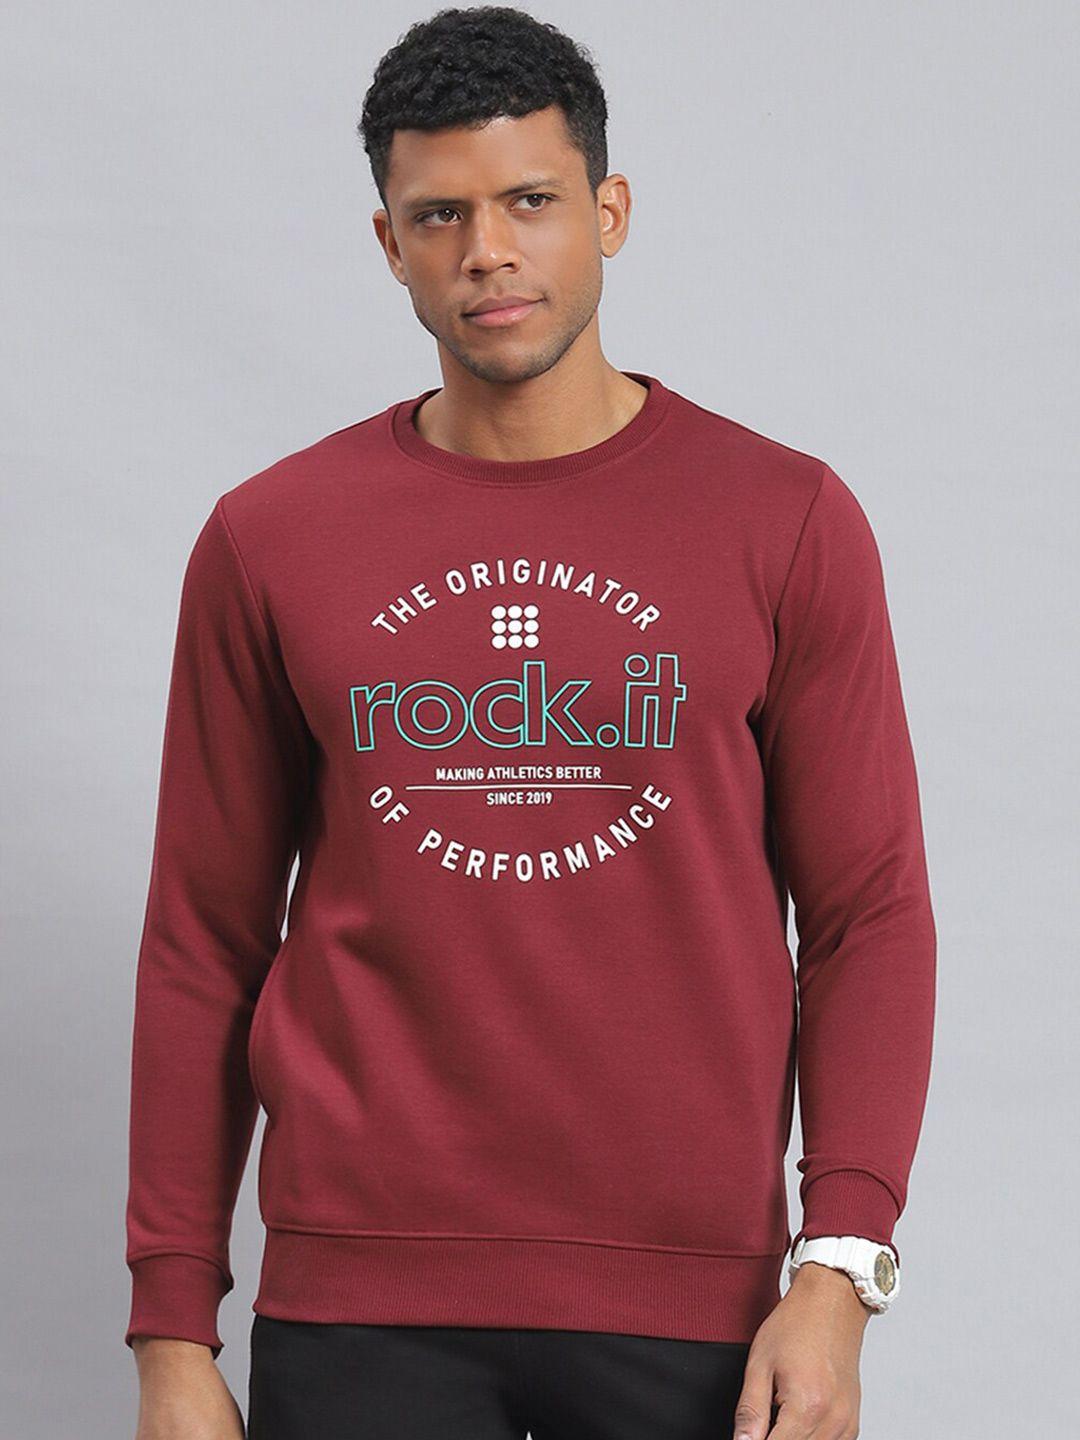 rock.it typography printed sweatshirt